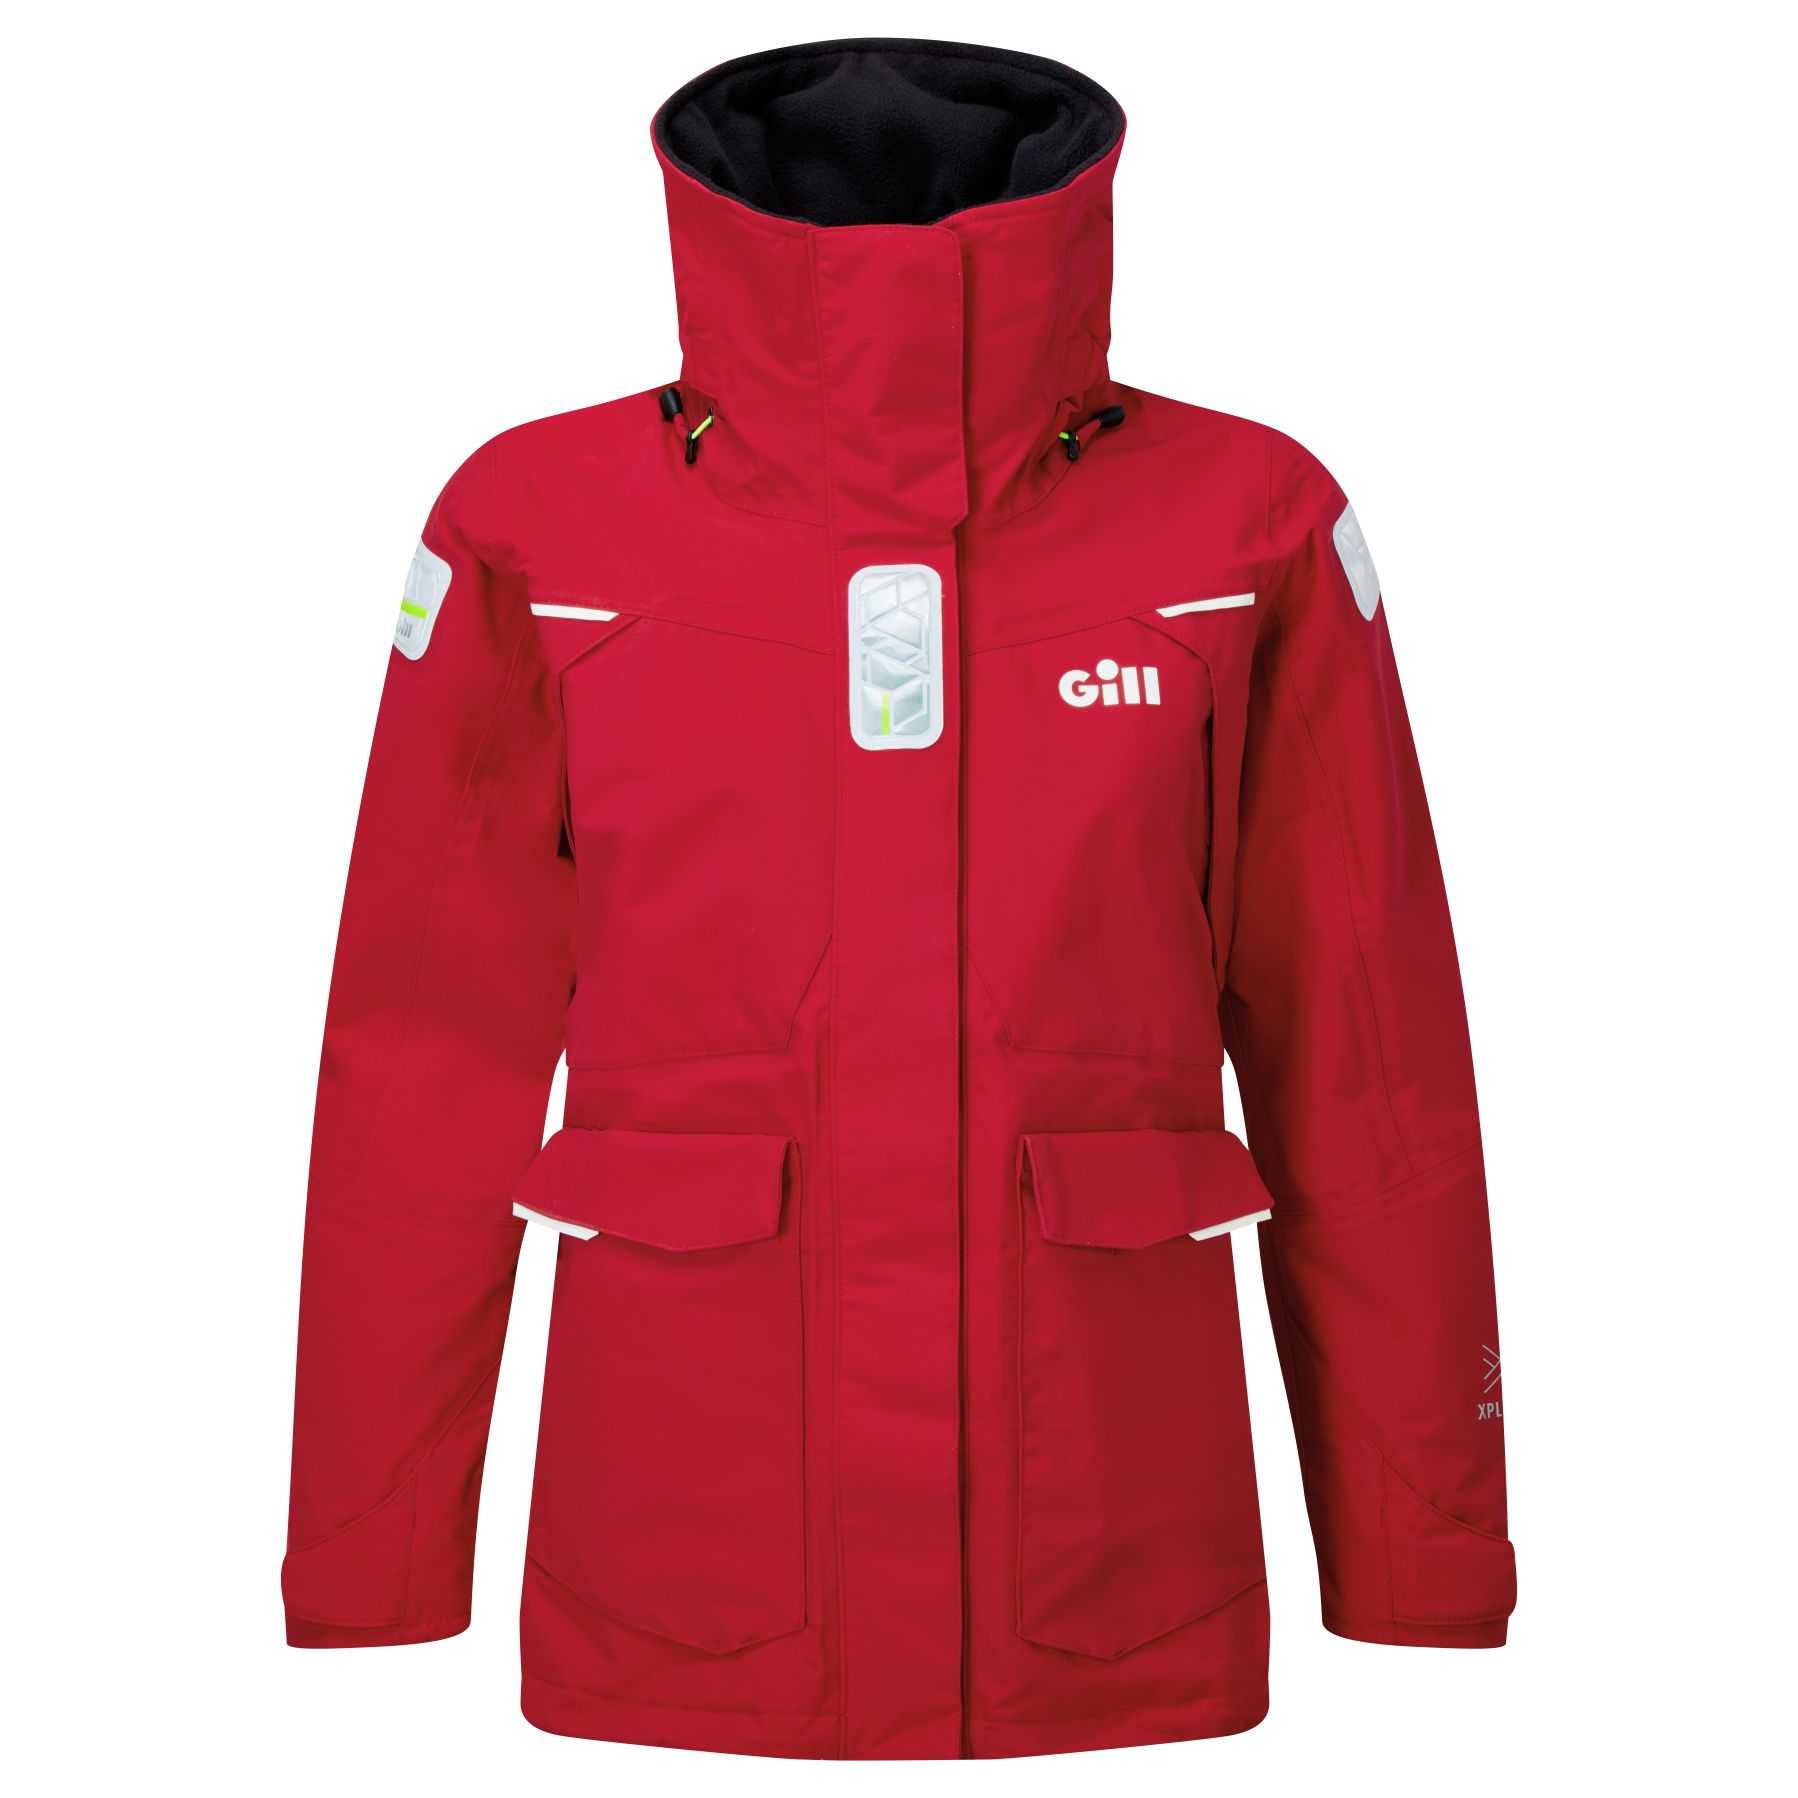 Gill - Women's Offshore Jacket